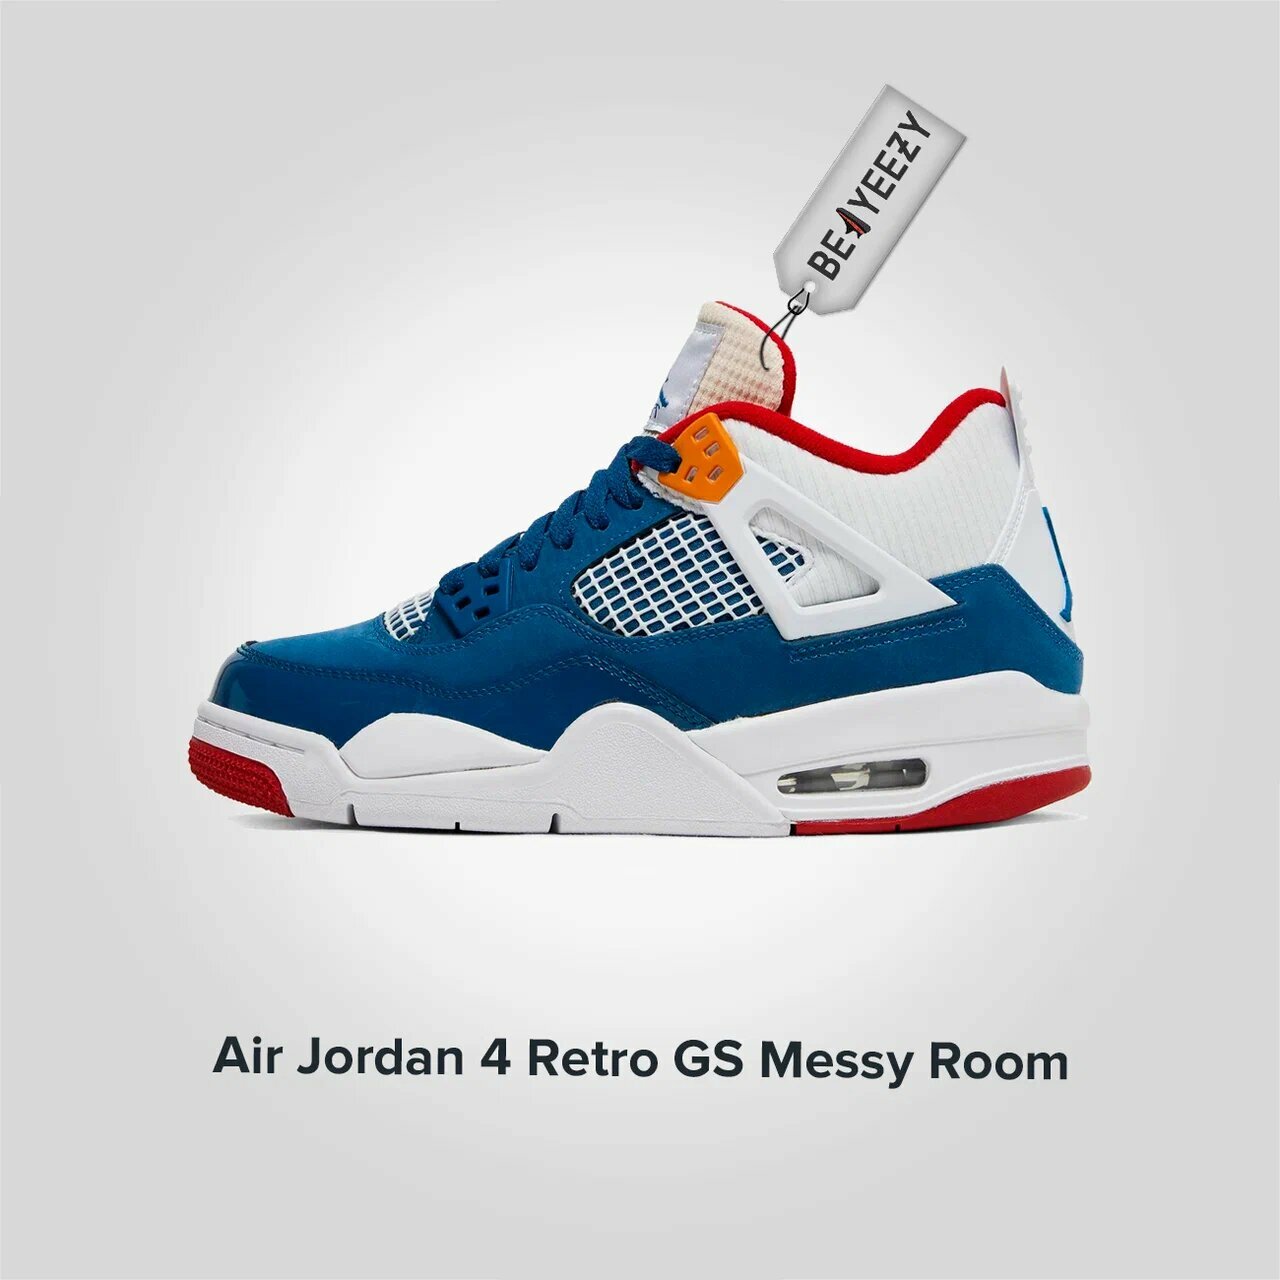 Jordan 4 Retro GS Messy Room